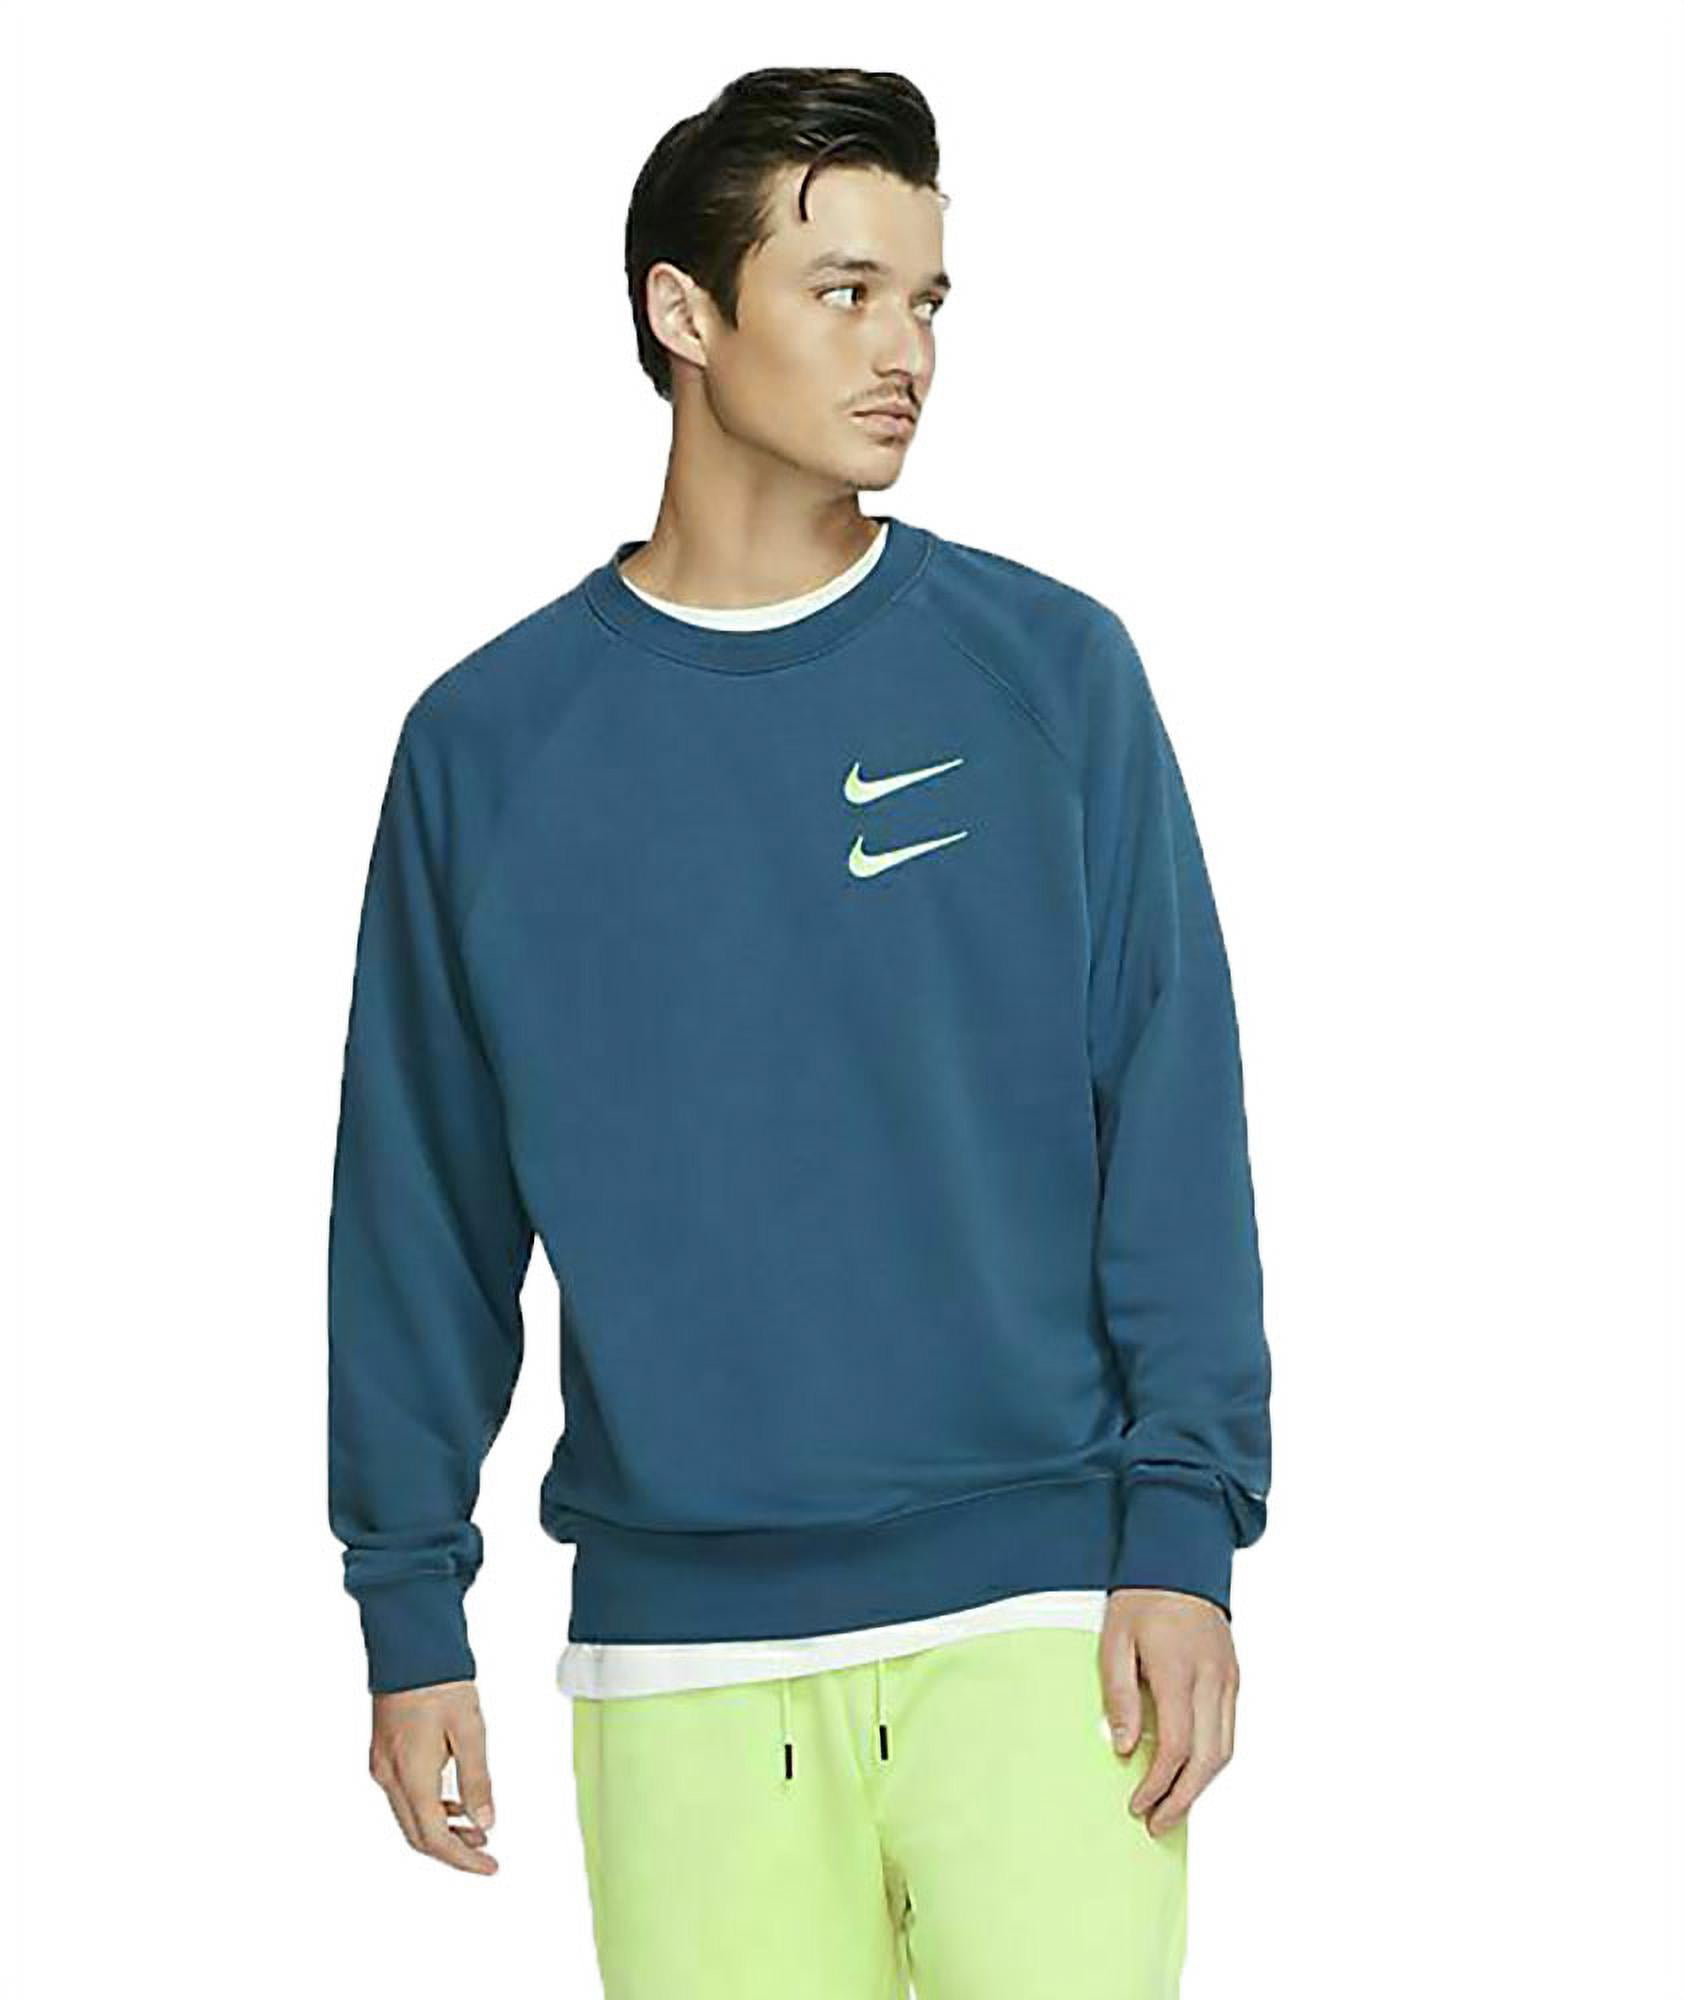 Nike Men's Double Swoosh French Terry Crew Sweatshirt - Walmart.com